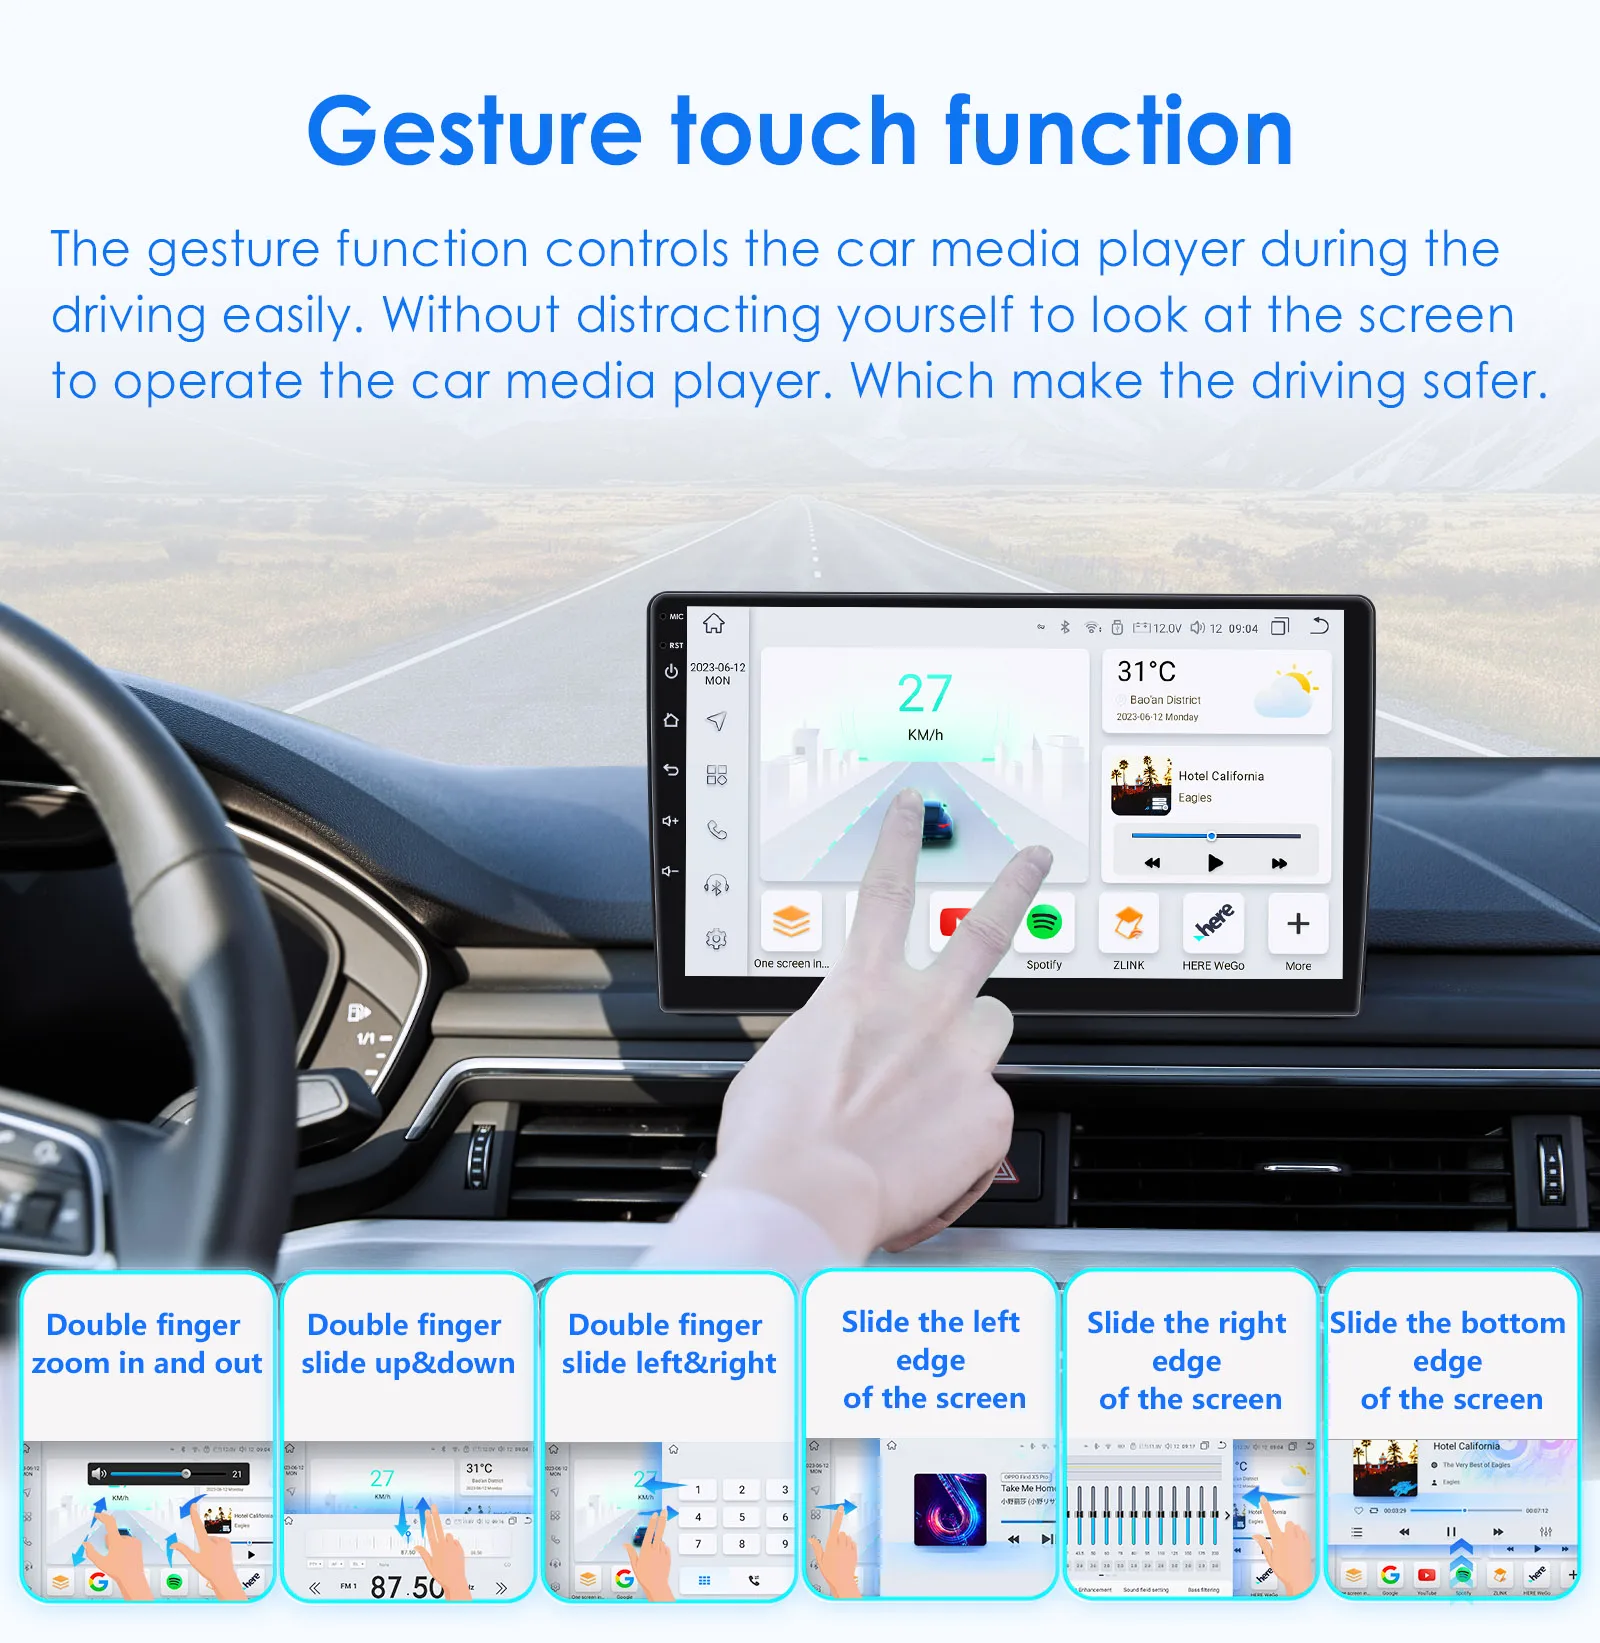 Carplay 4G 7-дюймовый DSP AI Система 2din Android Автомагнитола Для BMW 3-Серии E90 E91 E92 E93 Навигация GPS Мультимедийный Видеоплеер BT